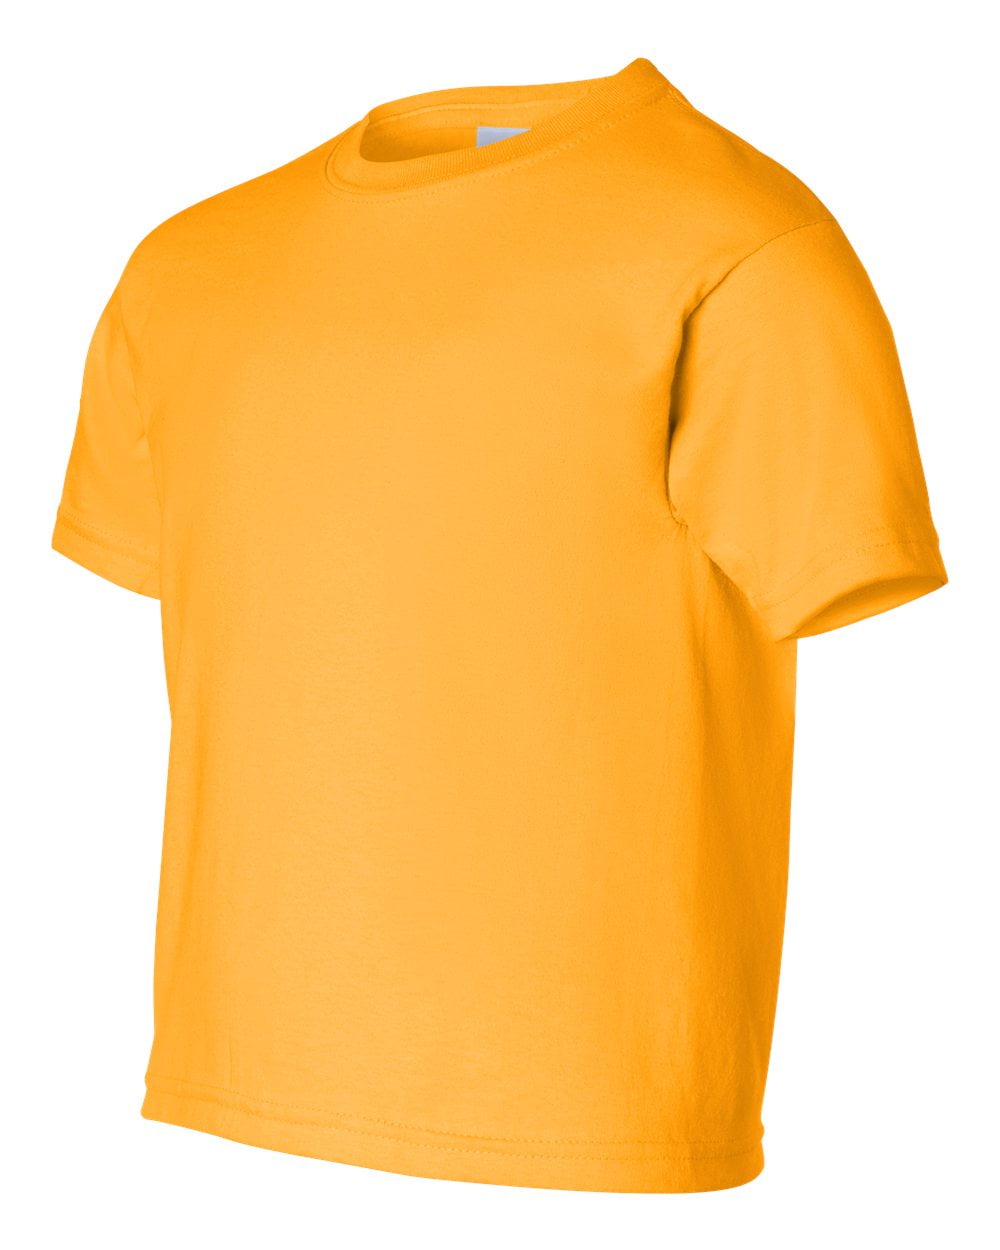 Gildan T-Rex Green Tie-Dye Youth Preshunk Heavyweight Cotton Tee Shirt Small 